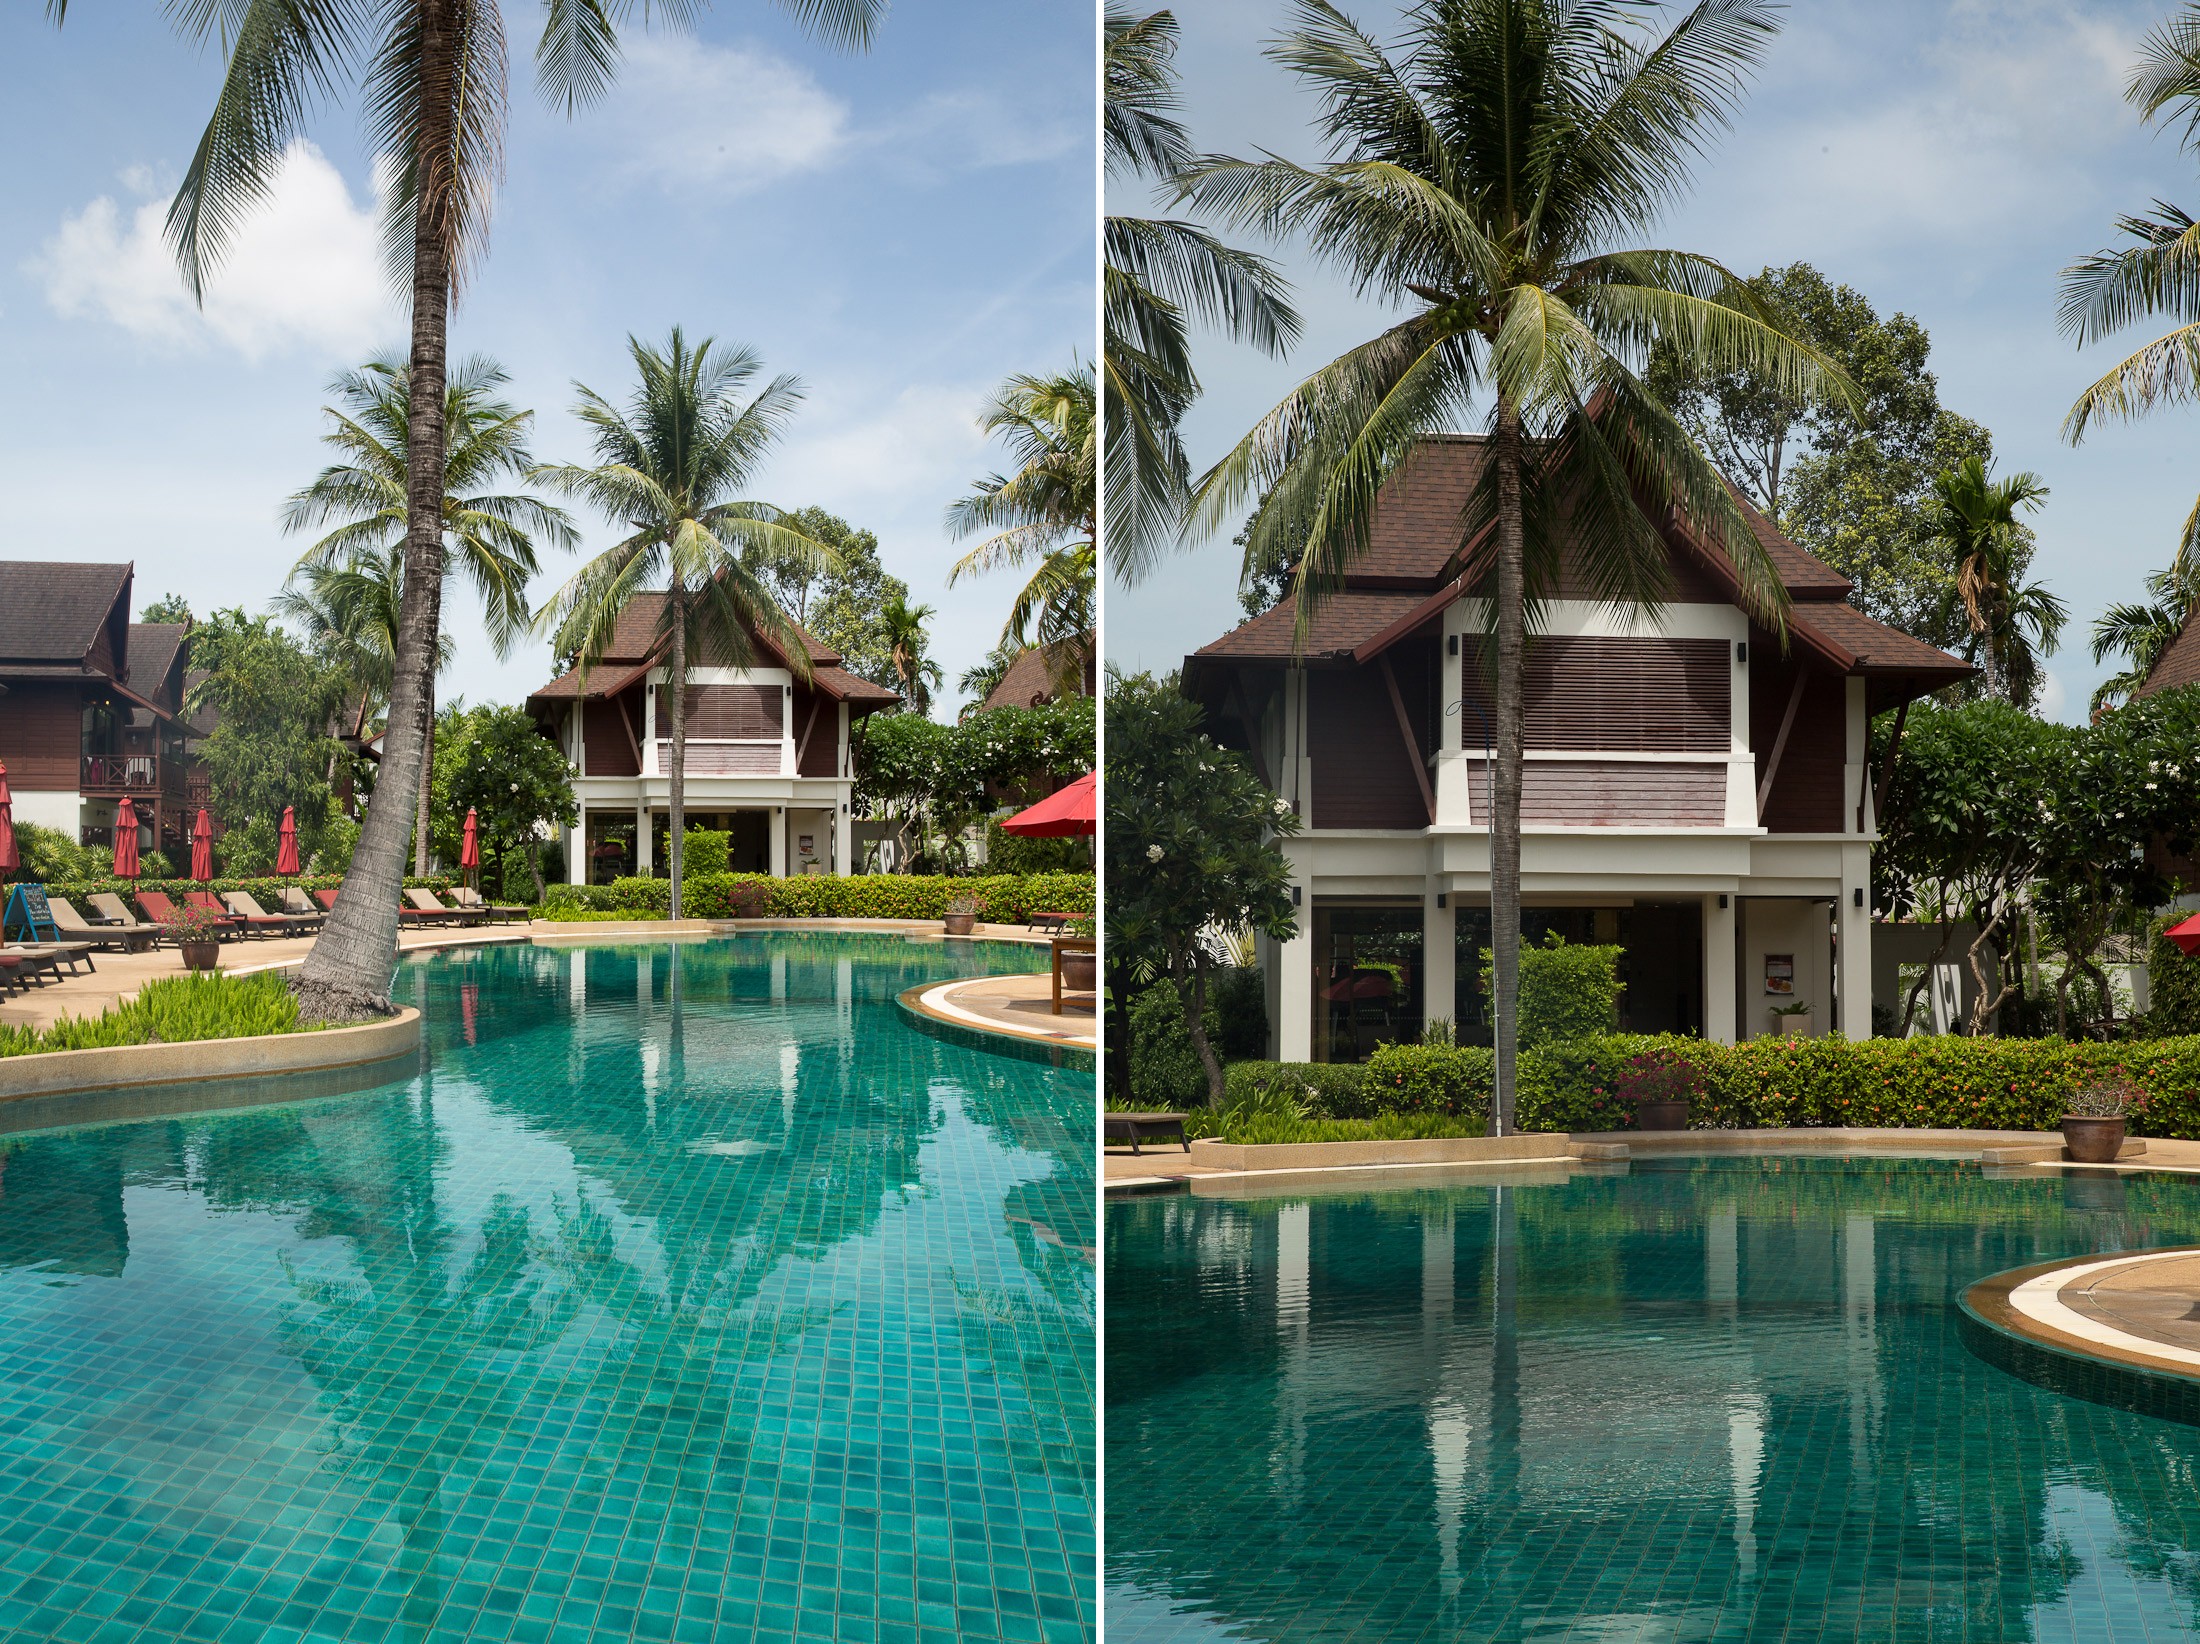 thailand koh samui chaweng beach island paradise vacation travel blog hut hotel pool paradise shershegoes.com